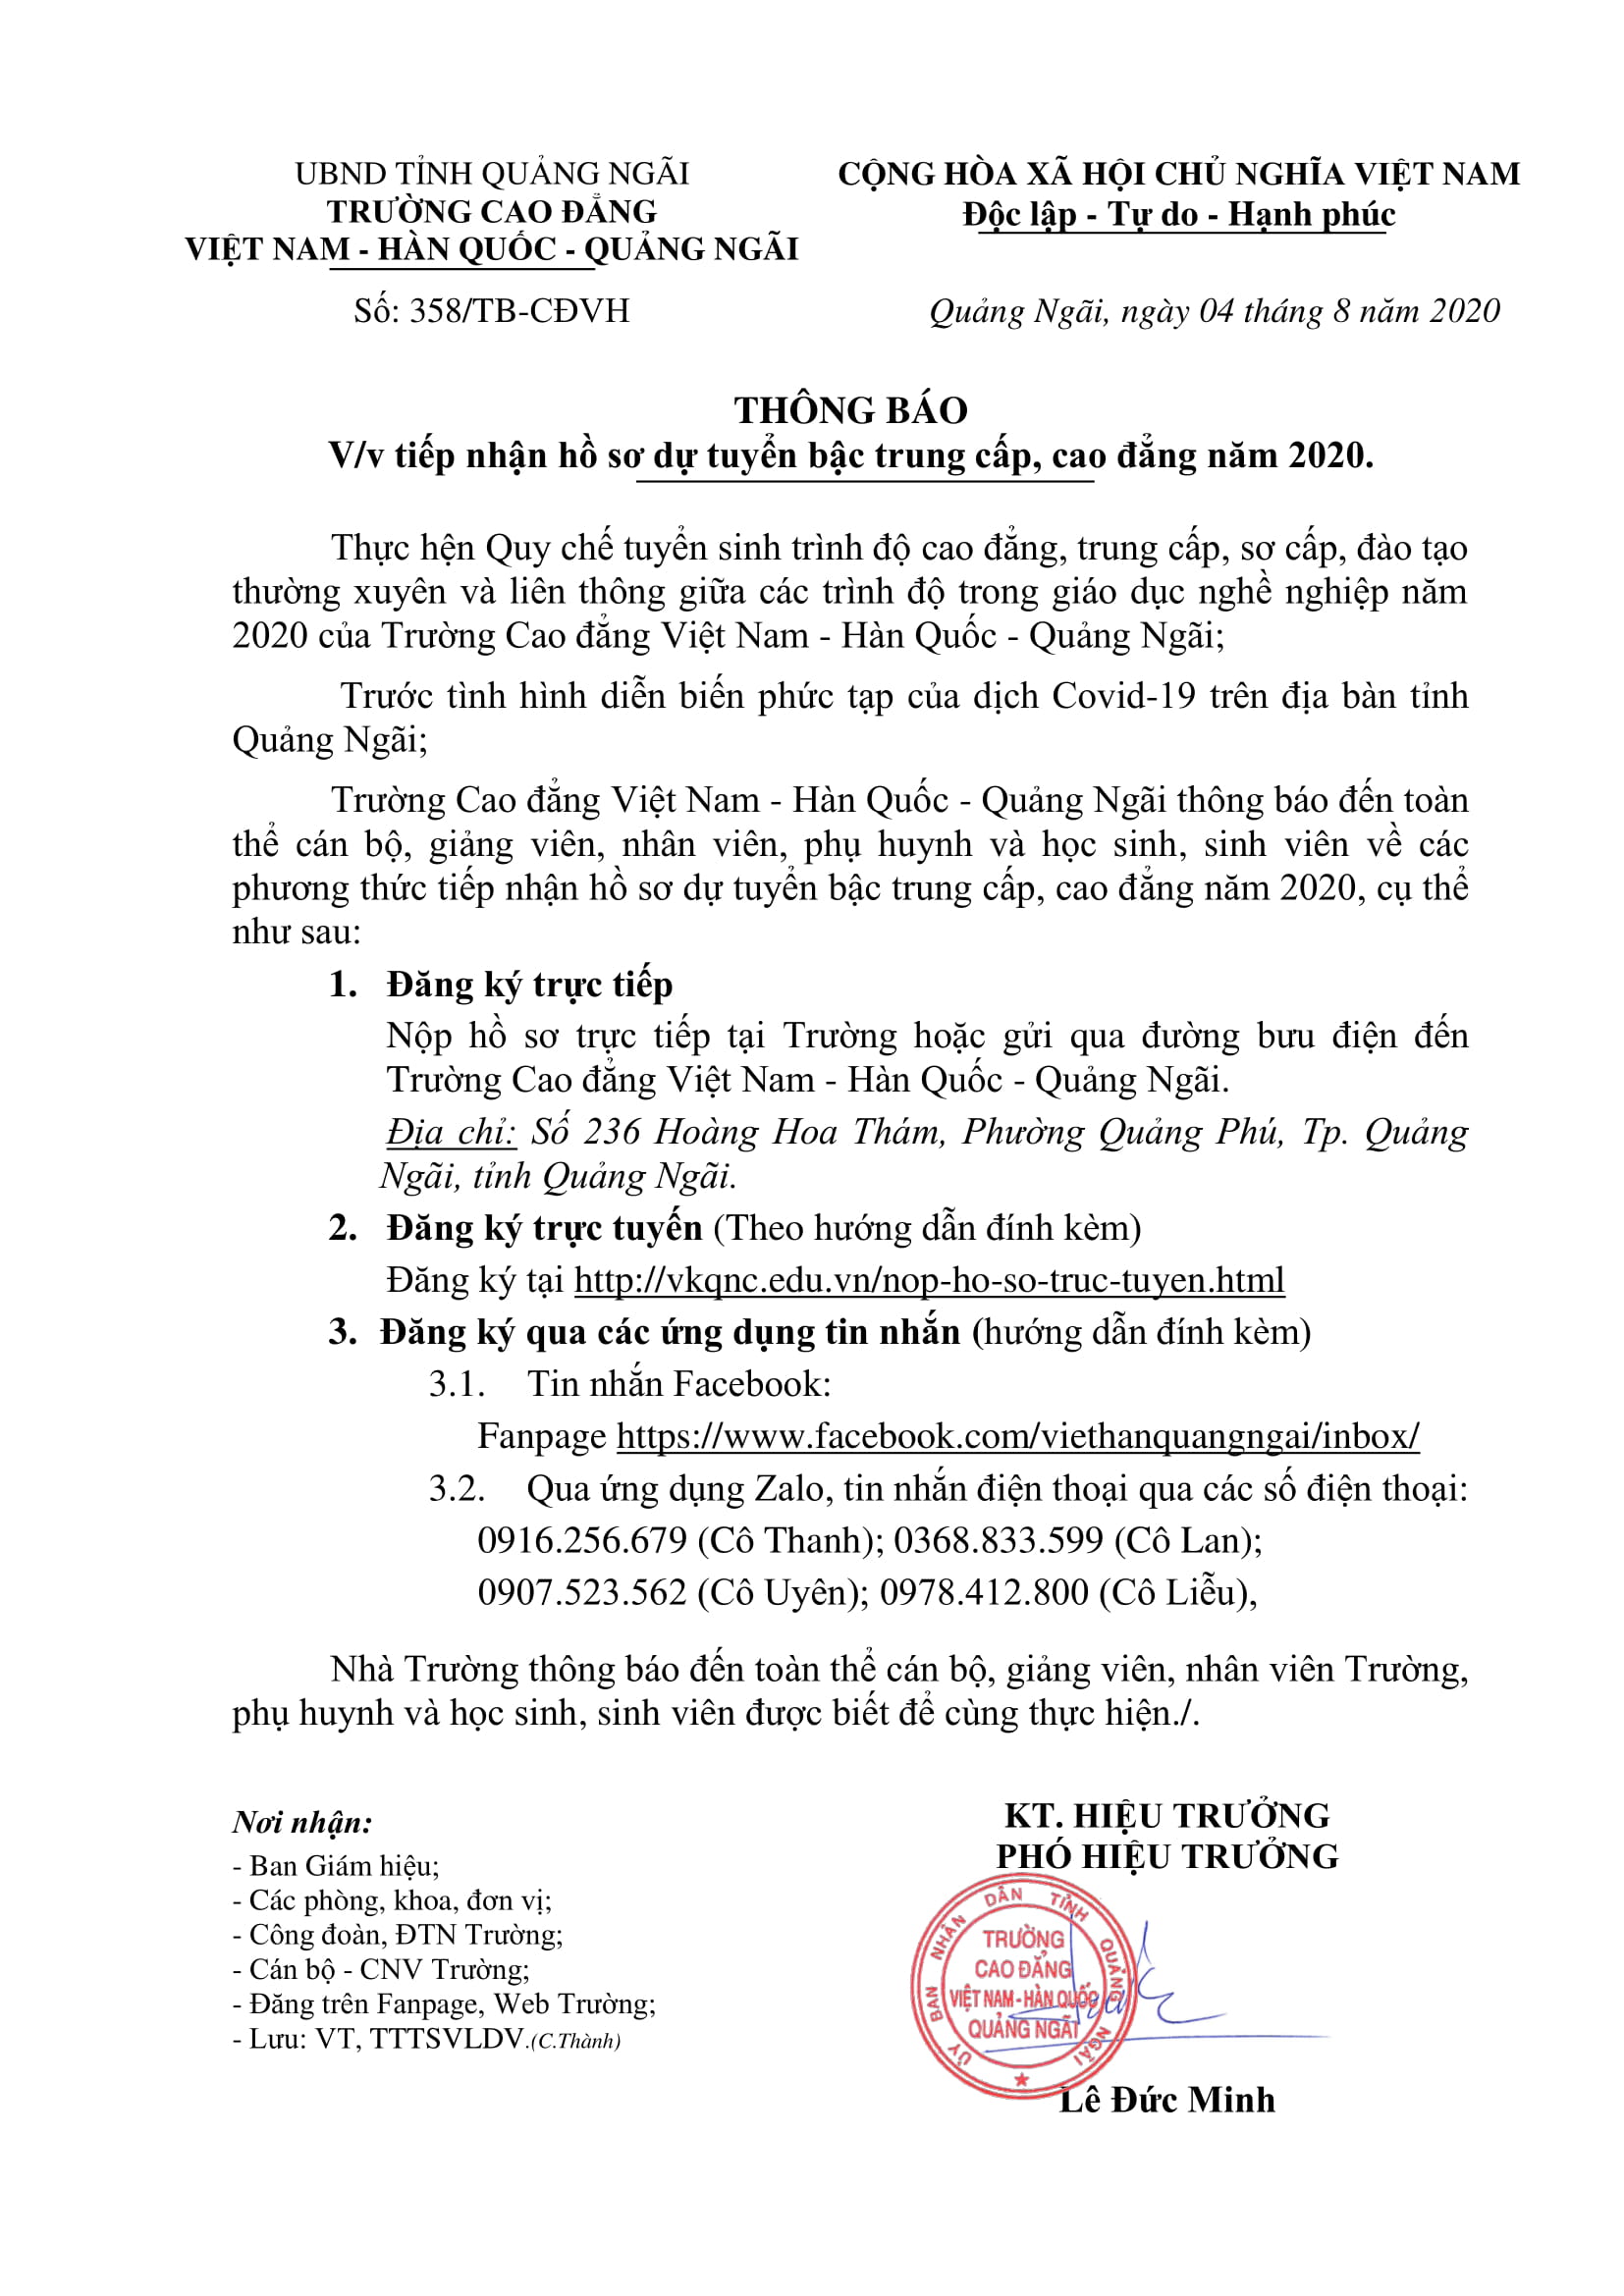 358-TB-CDVH THONG BAO PHUONG AN TIEP NHAN HO SO DU TUYEN.signed.signed-1.jpg